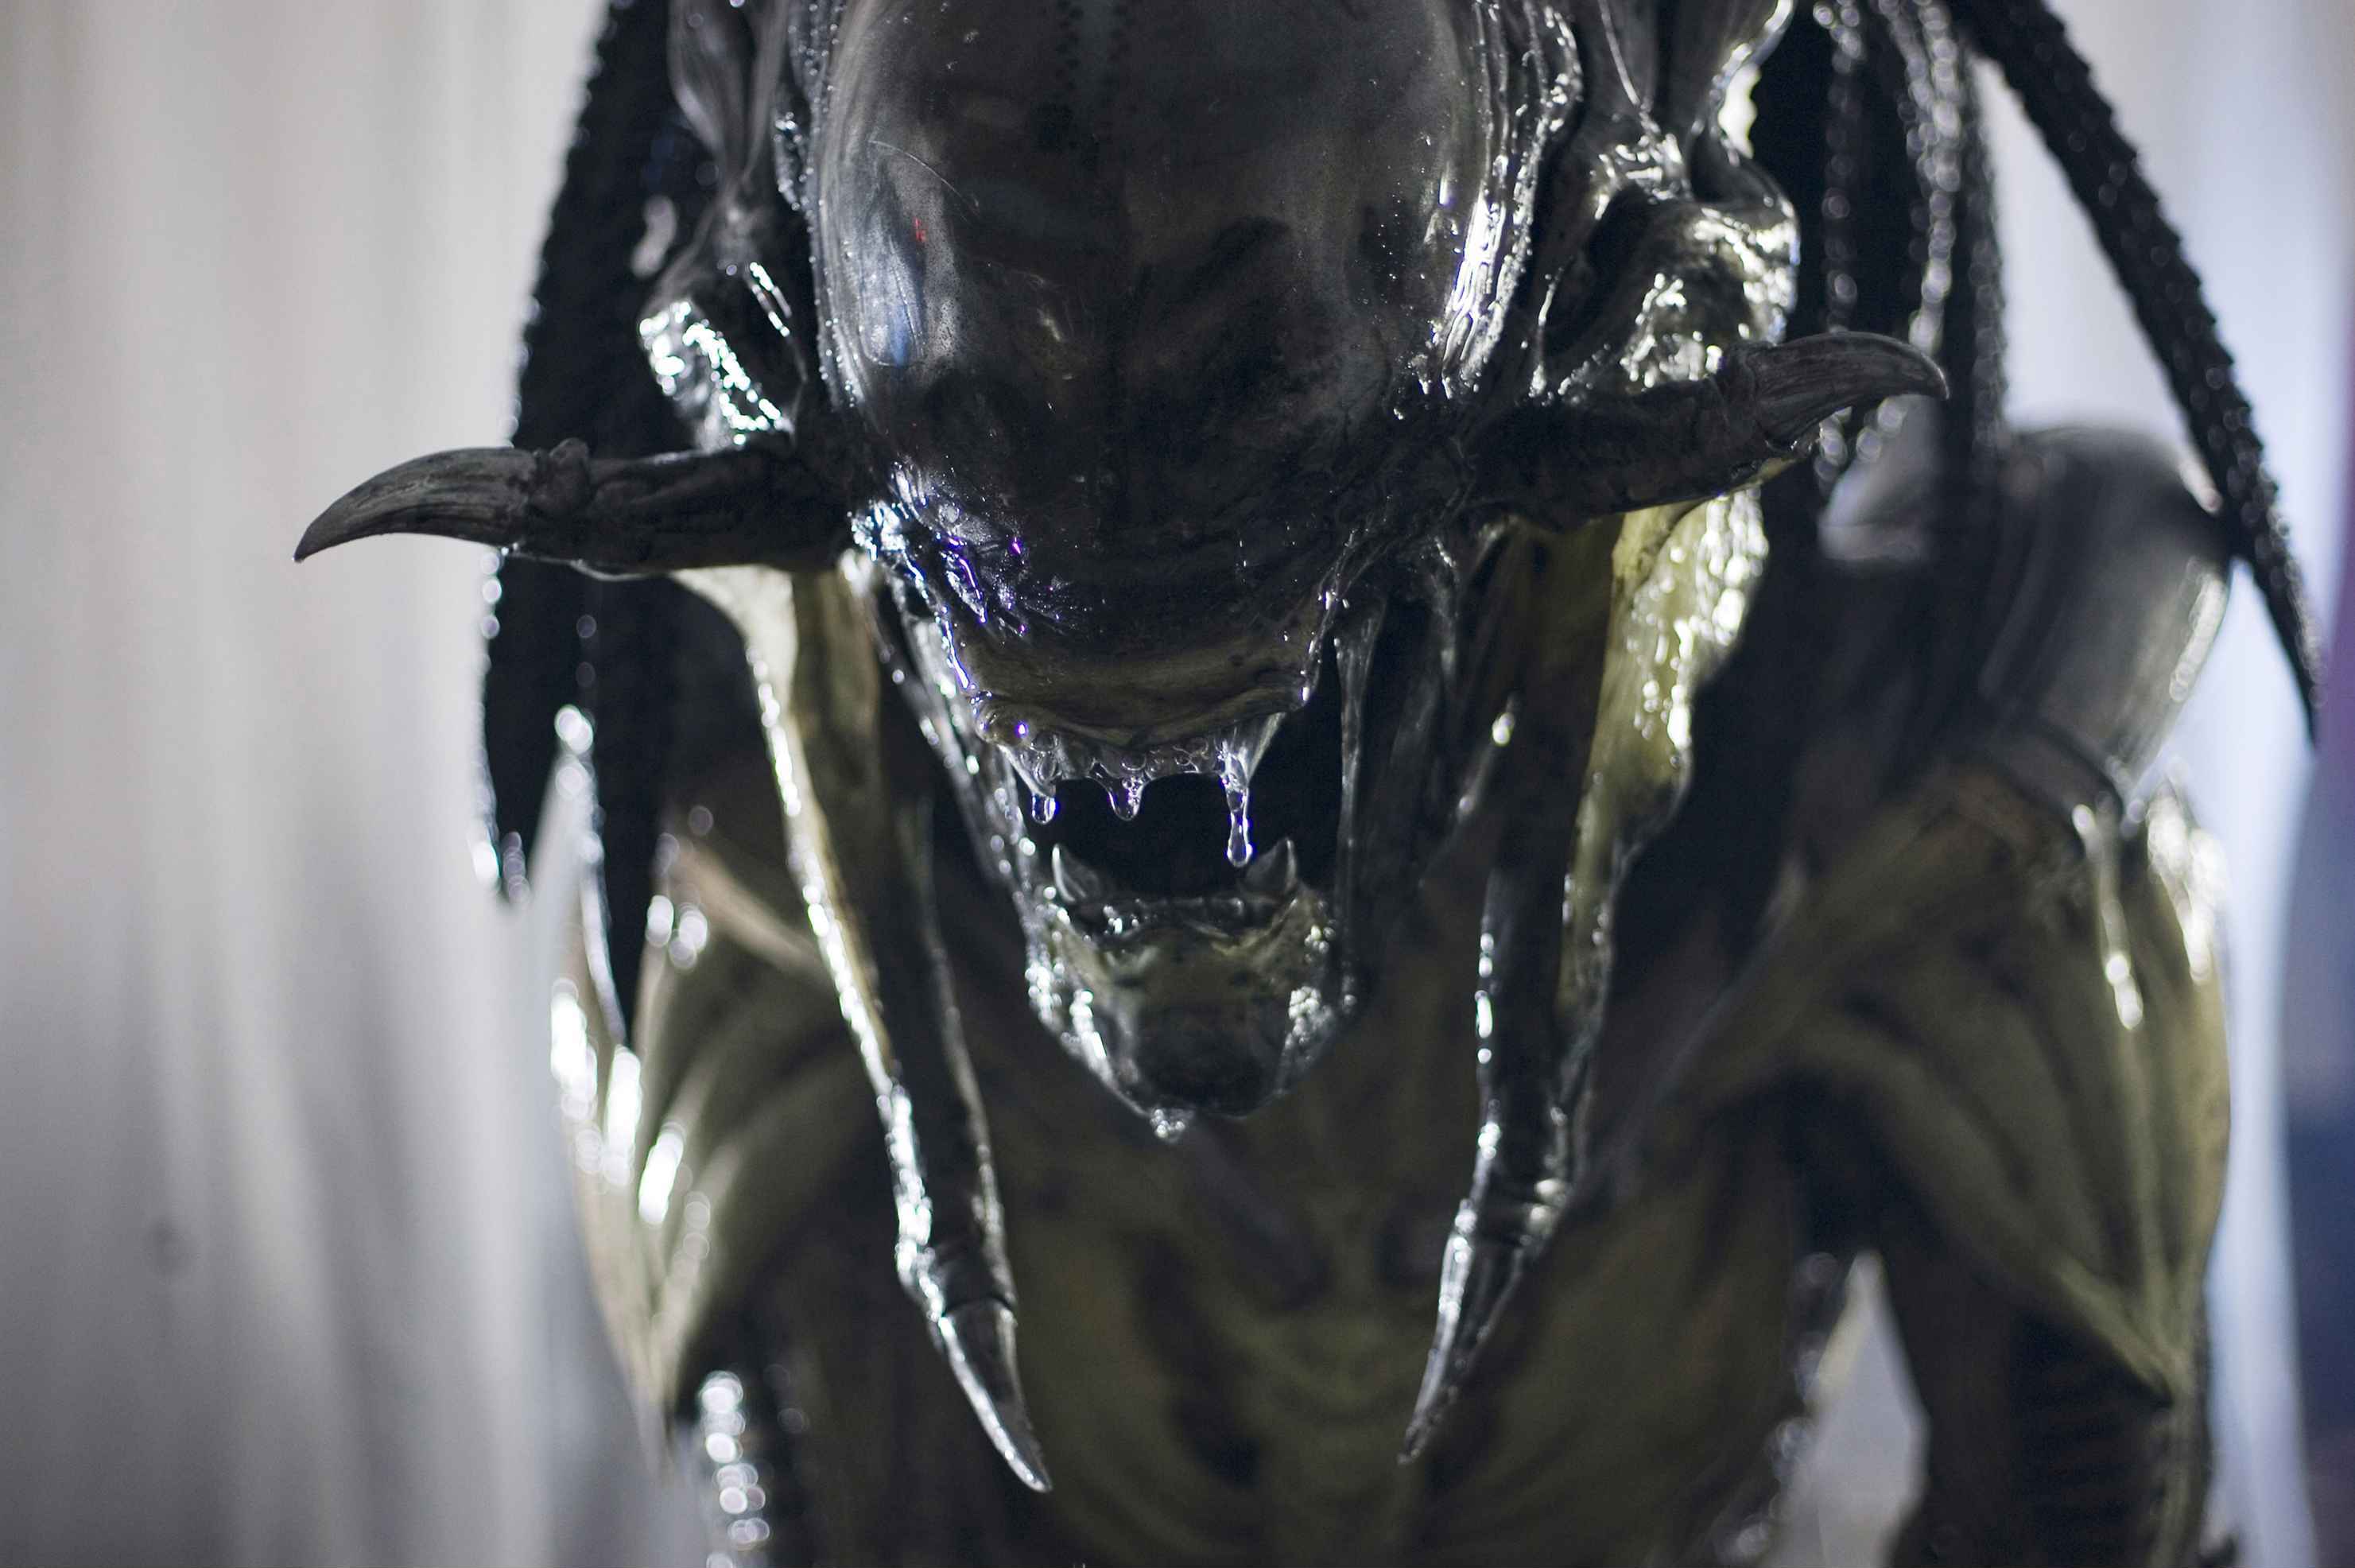 Aliens Vs Predator фильма, Иностранцы кино, Иностранцы - обои на рабочий стол